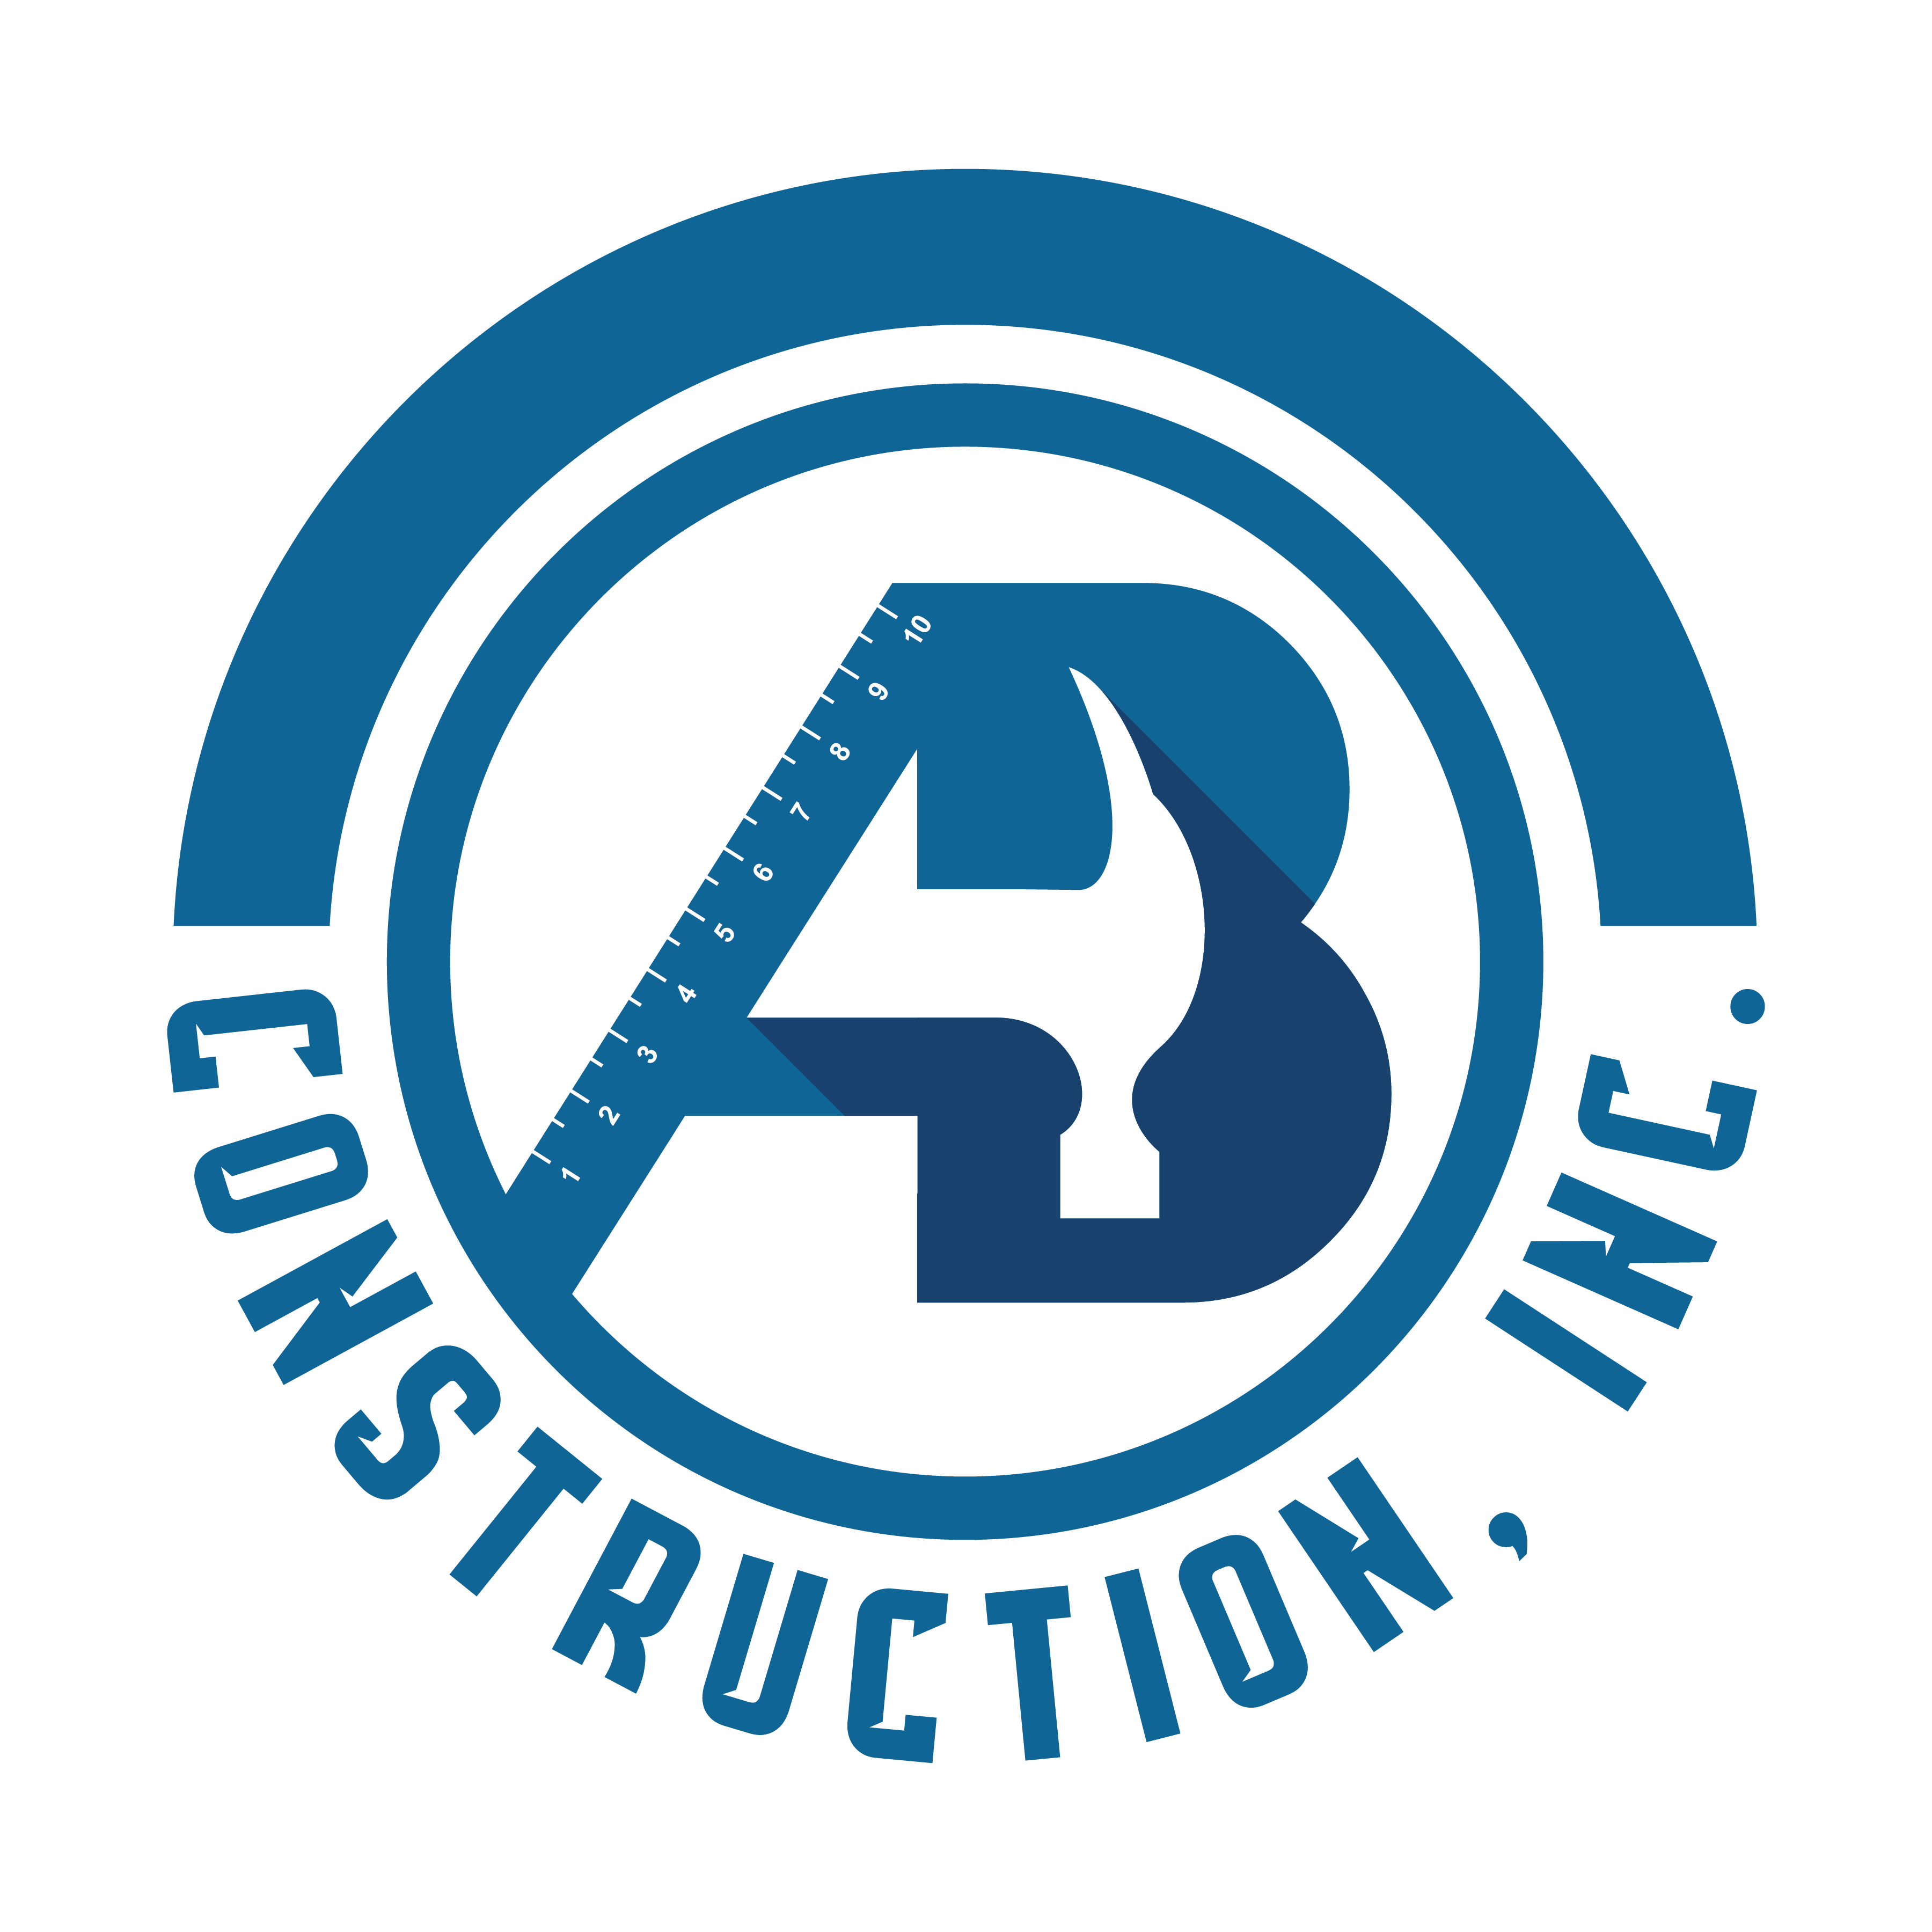 AB Construction Logo